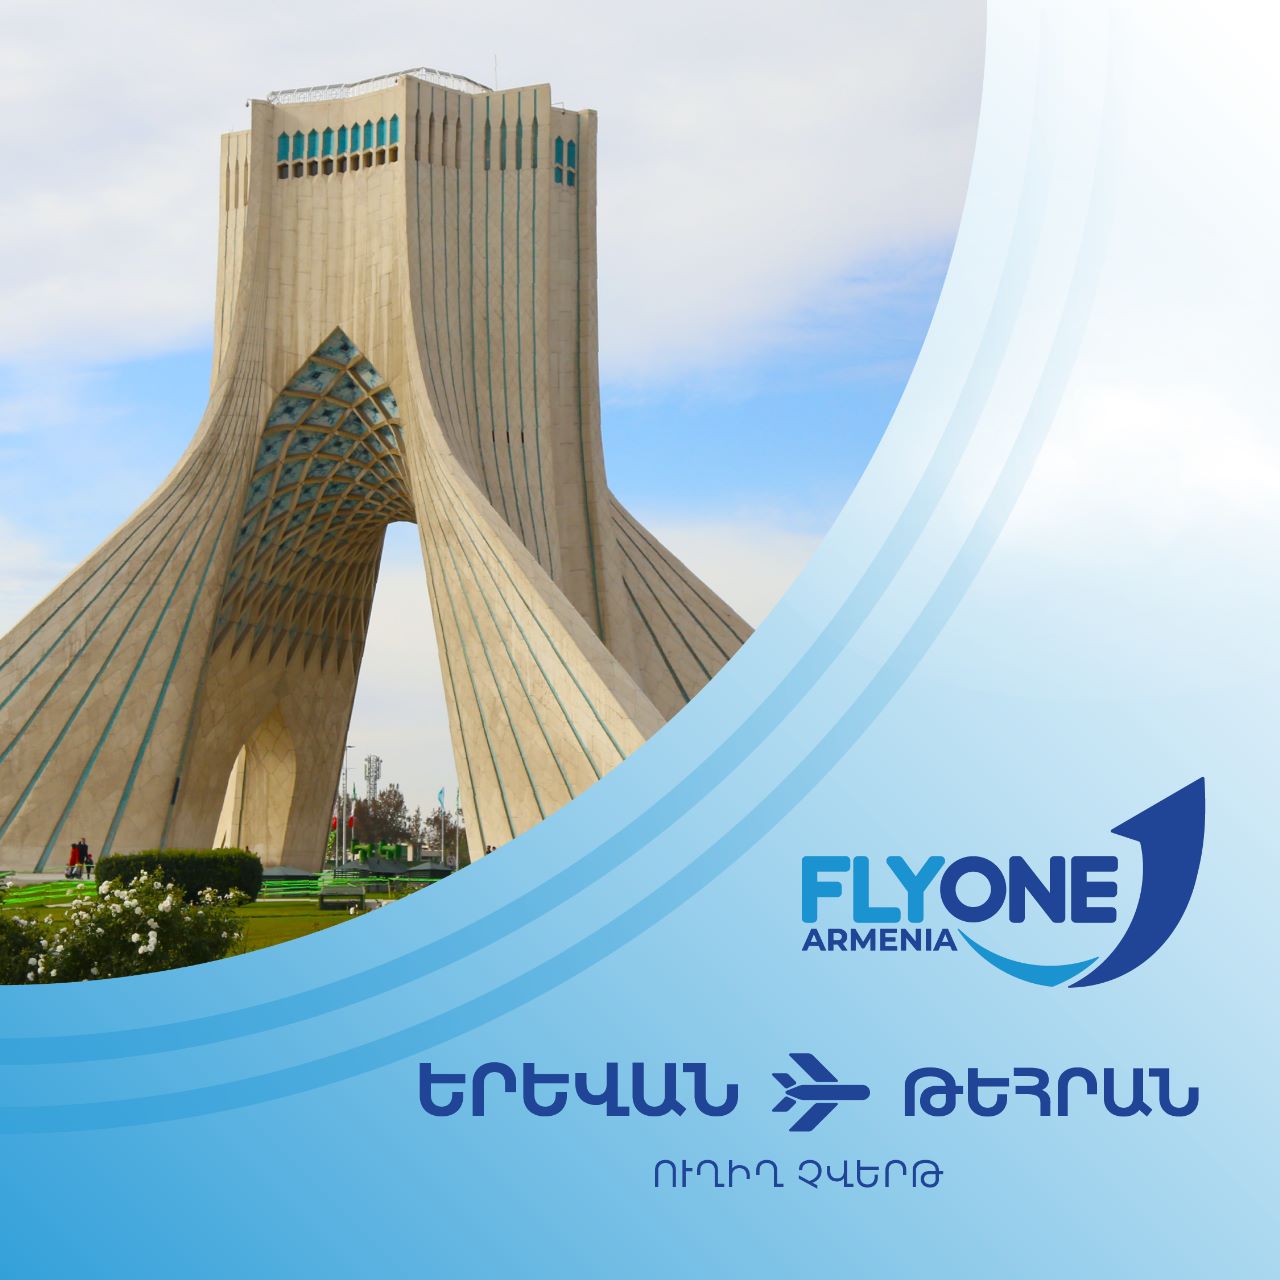 FLYONE ավիաընկերության նոր ուղղությունը՝ Երևան - Թեհրան- Երևան